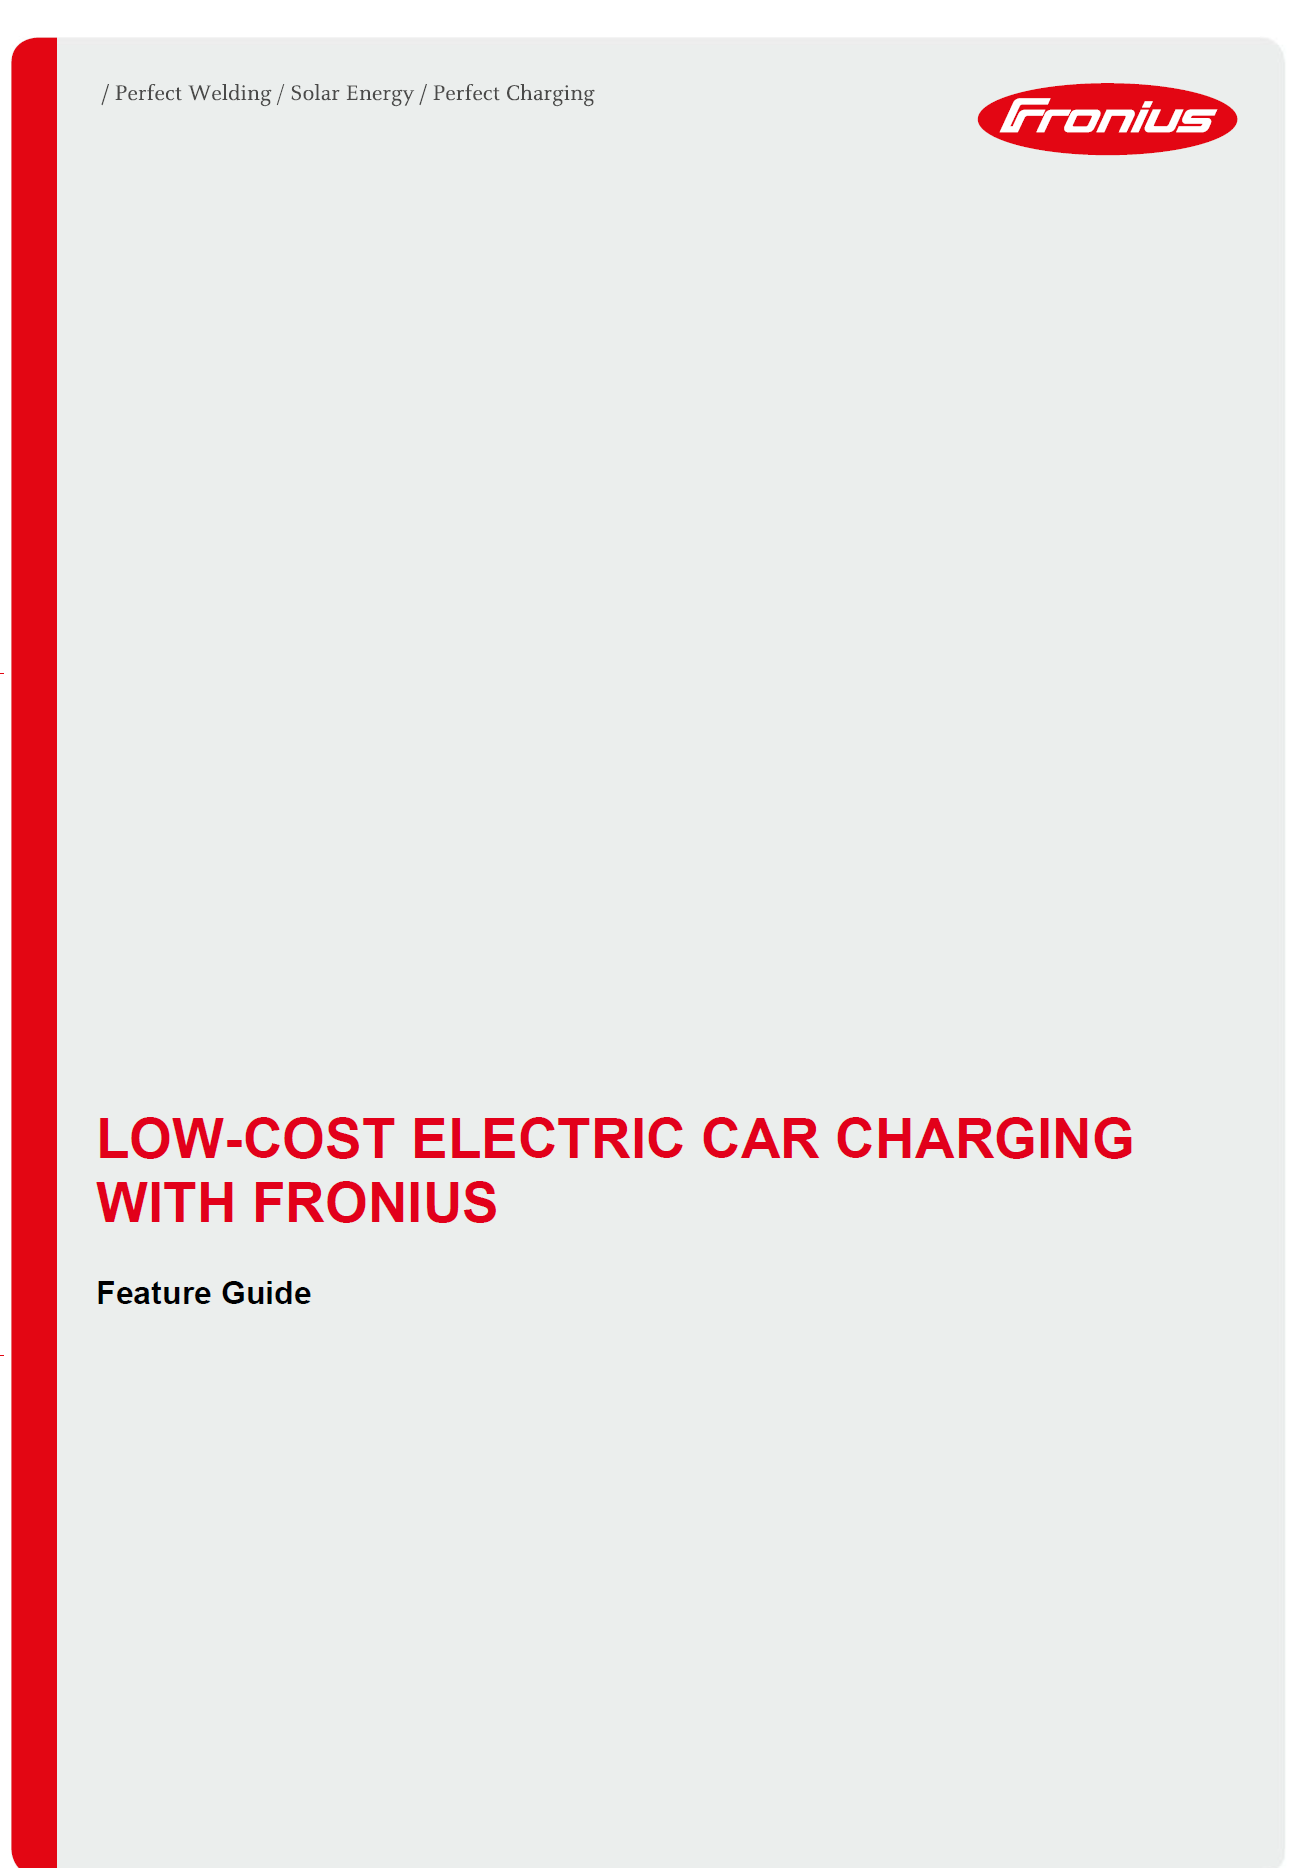 Fronius Wattpilot Low Cost Electric Car Charging Application Guide